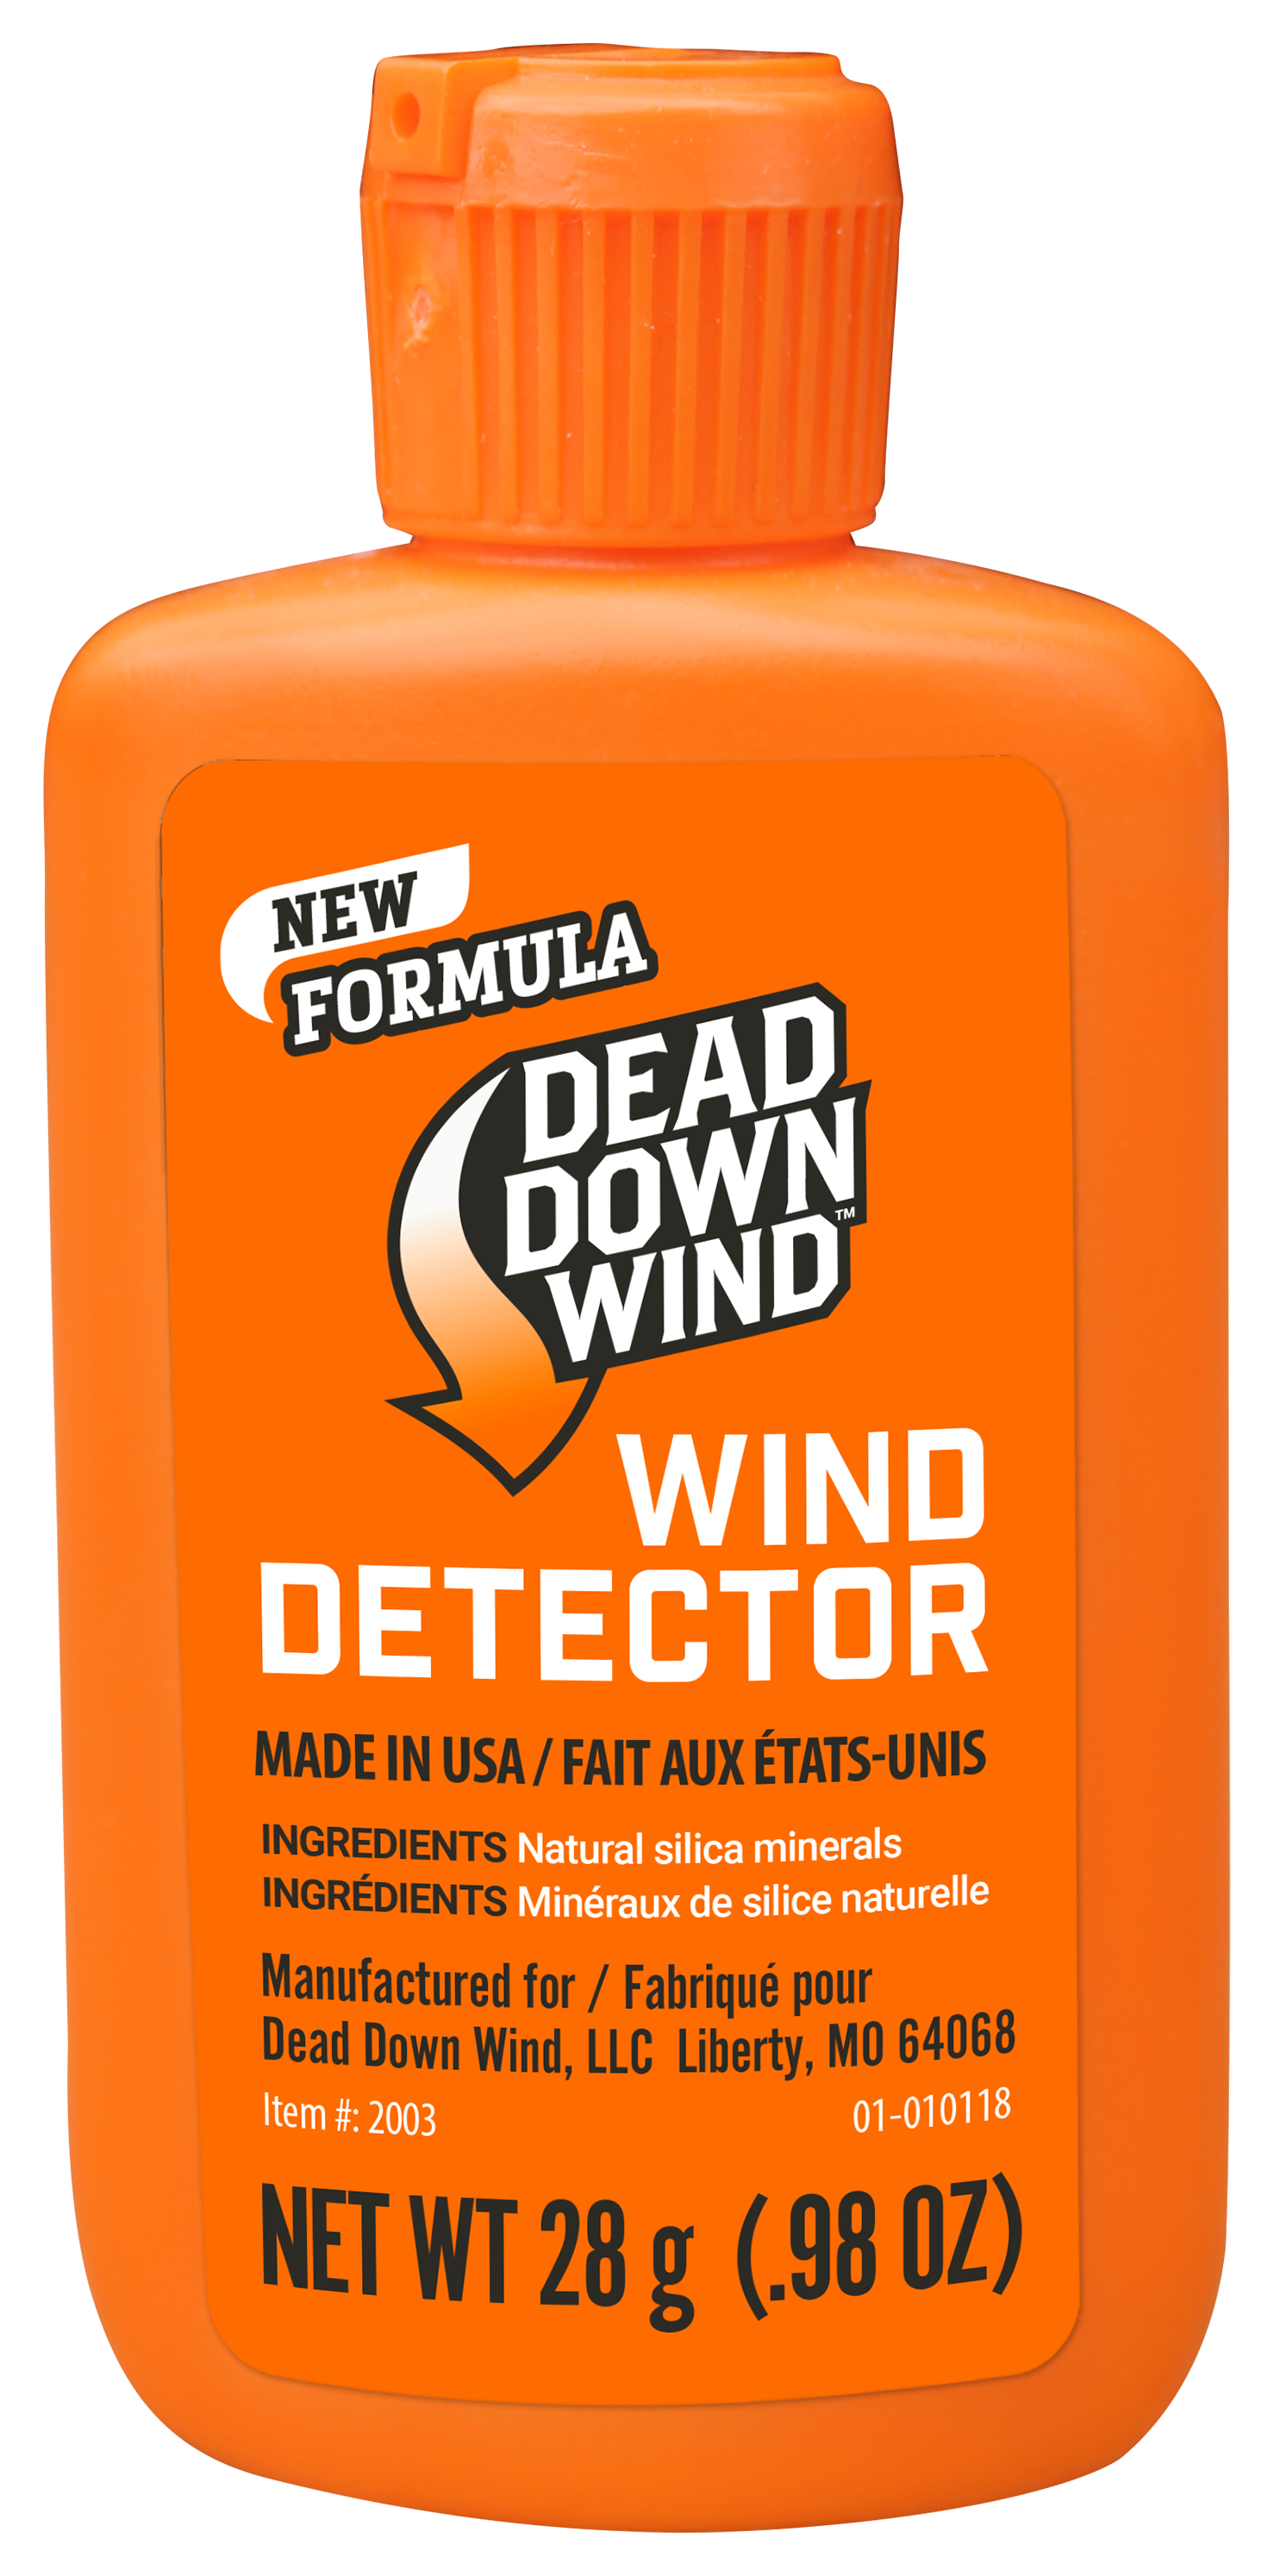 Dead Down Wind ScentPrevent Dryer Sheets